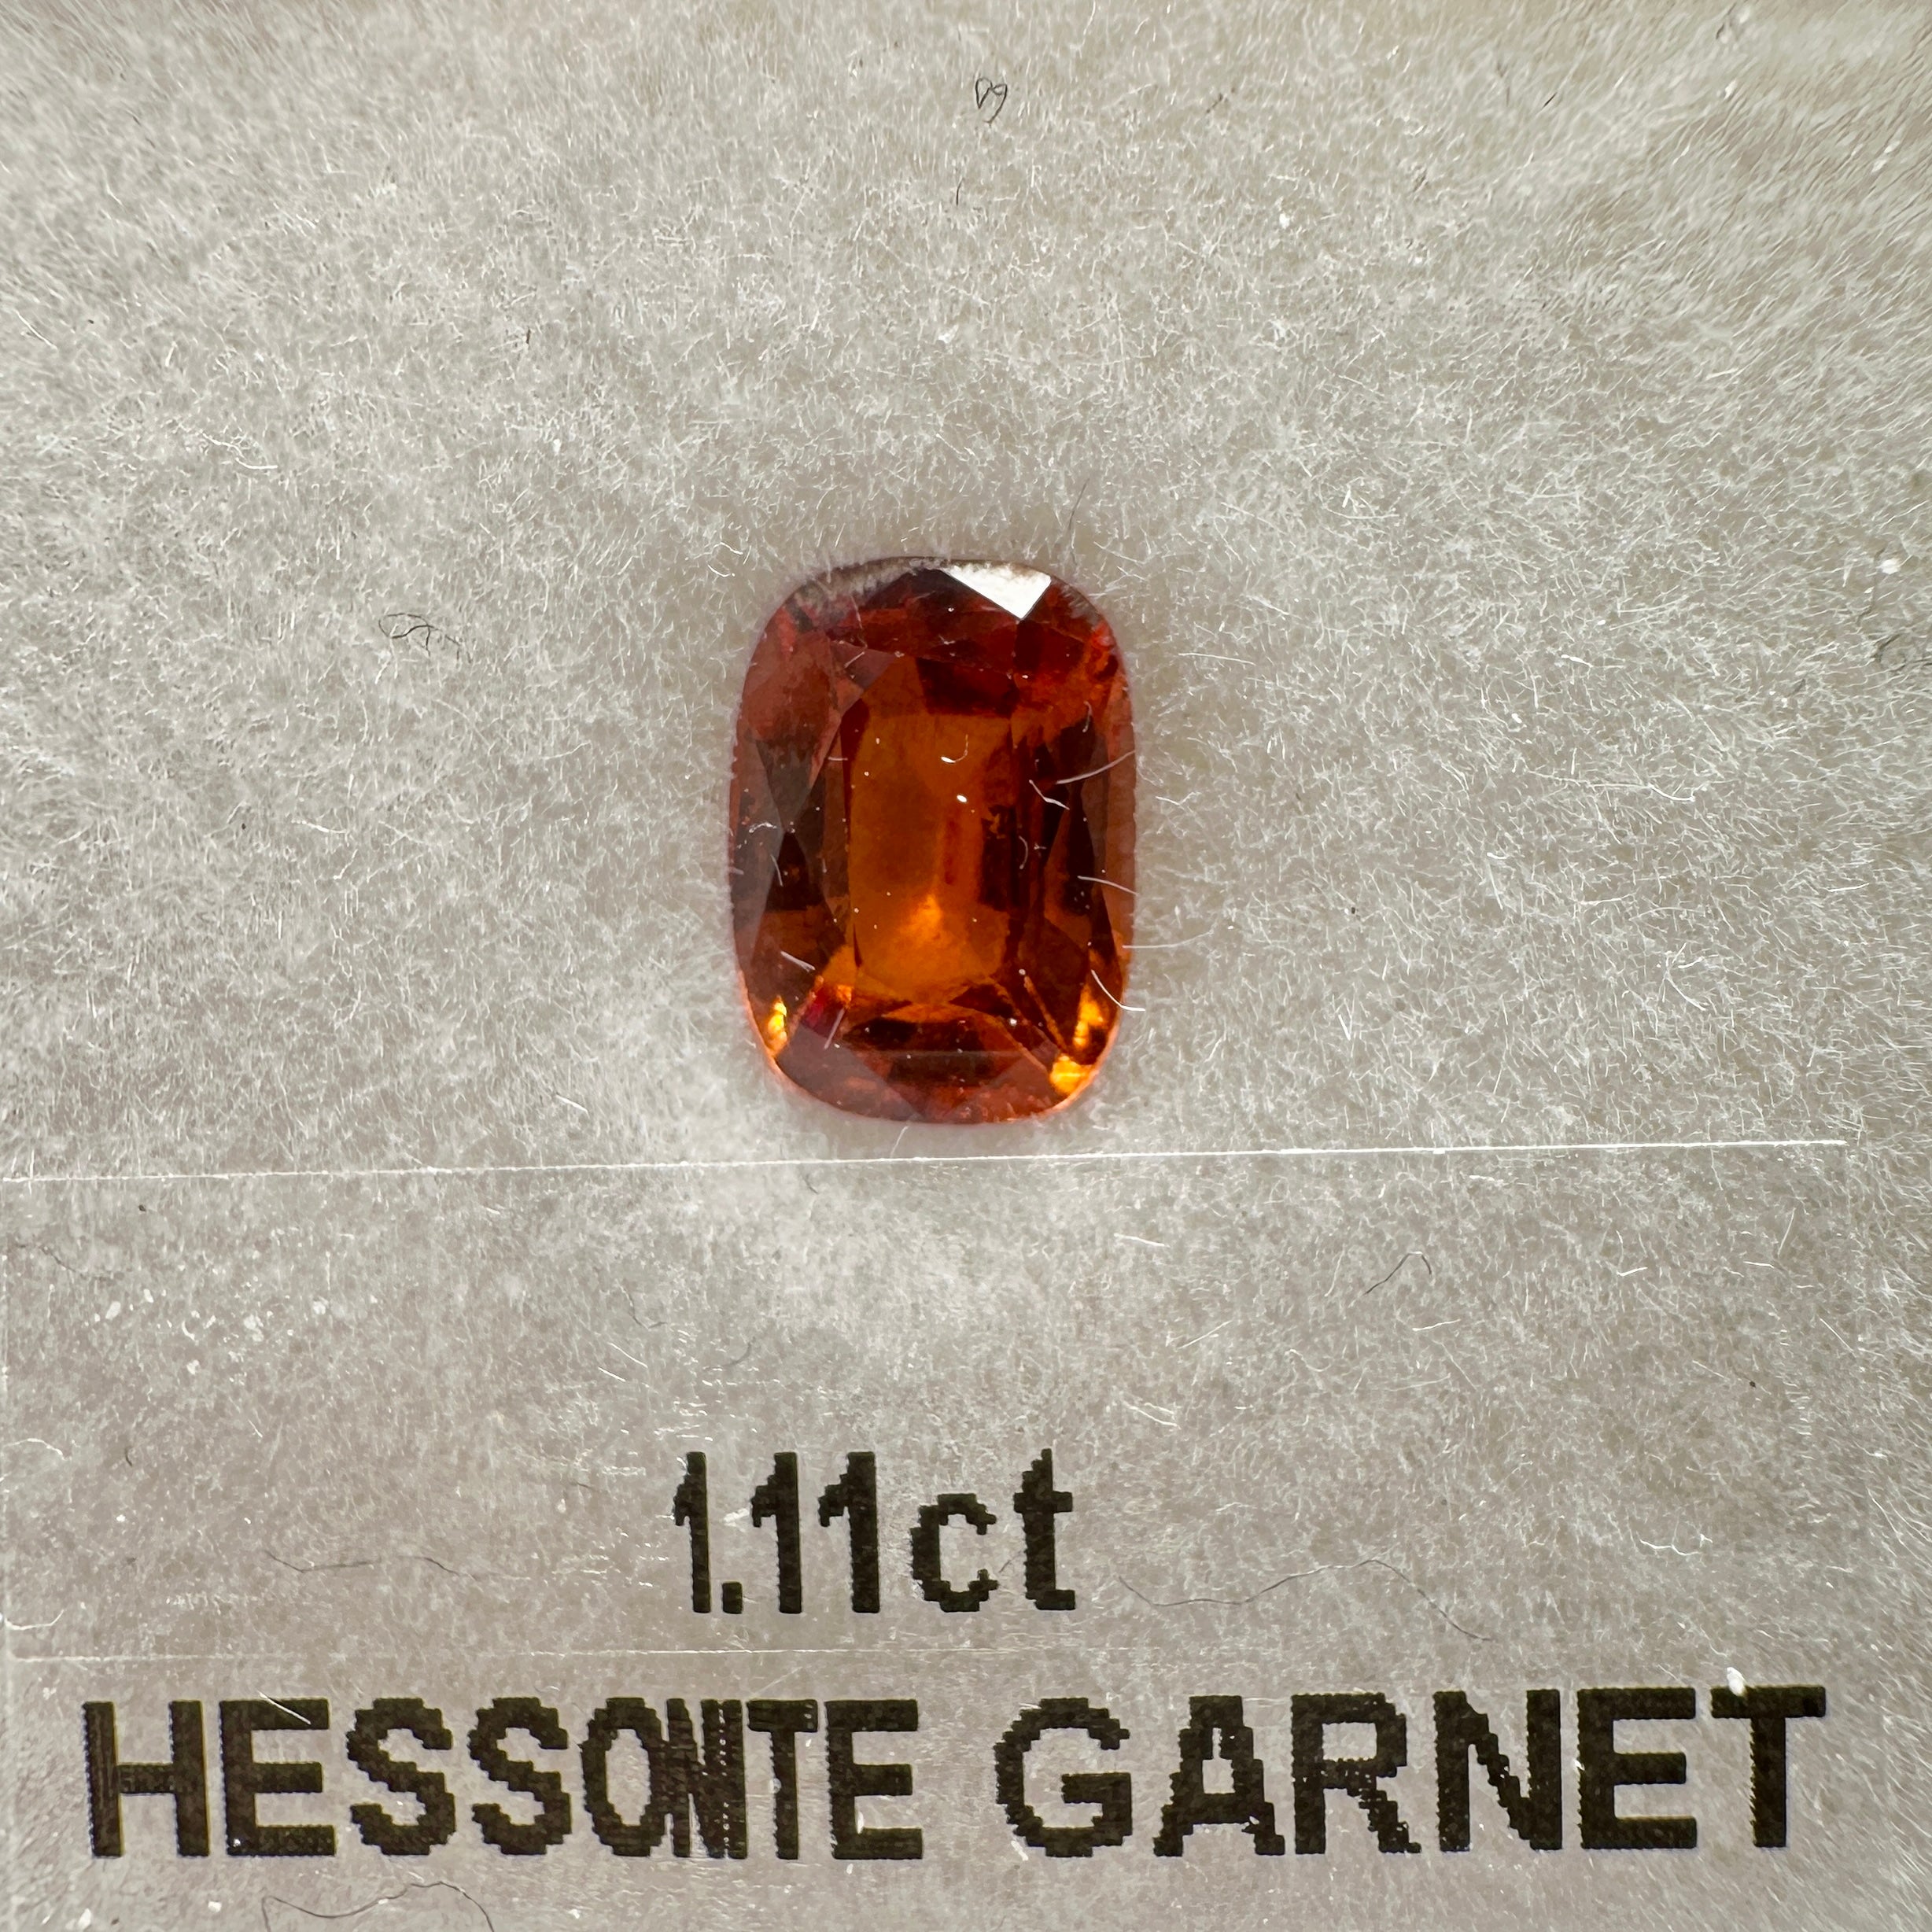 1.11ct Hessonite Garnet, Untreated Unheated, native cut